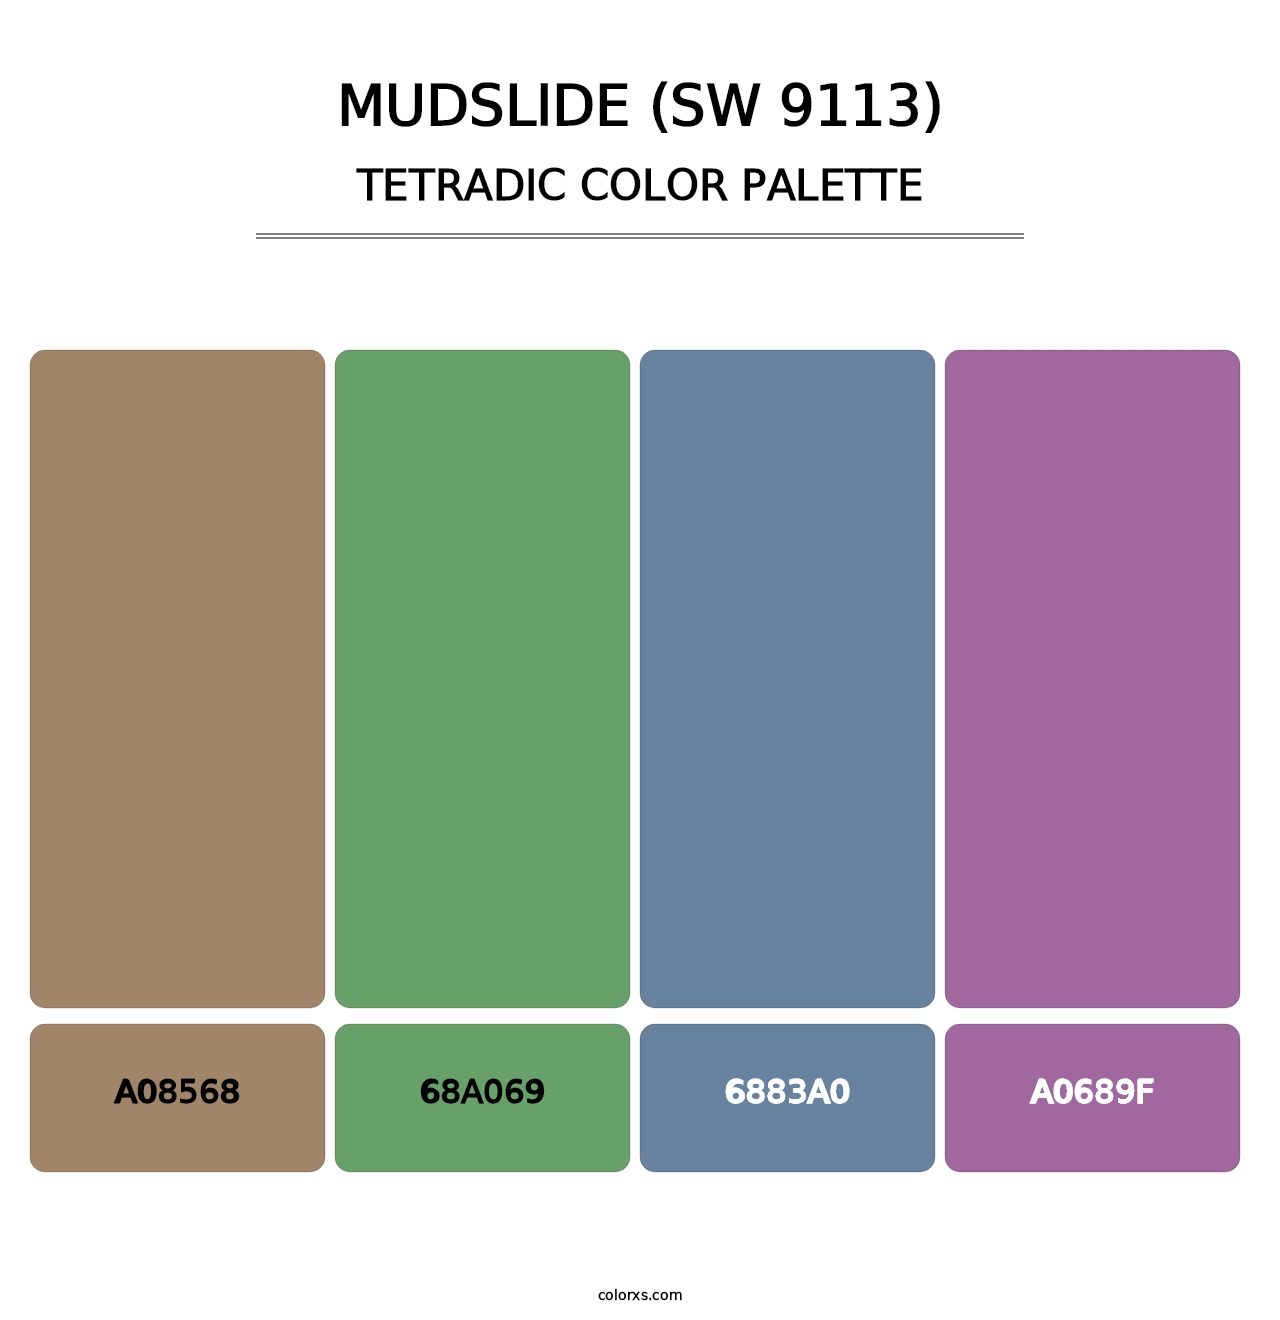 Mudslide (SW 9113) - Tetradic Color Palette